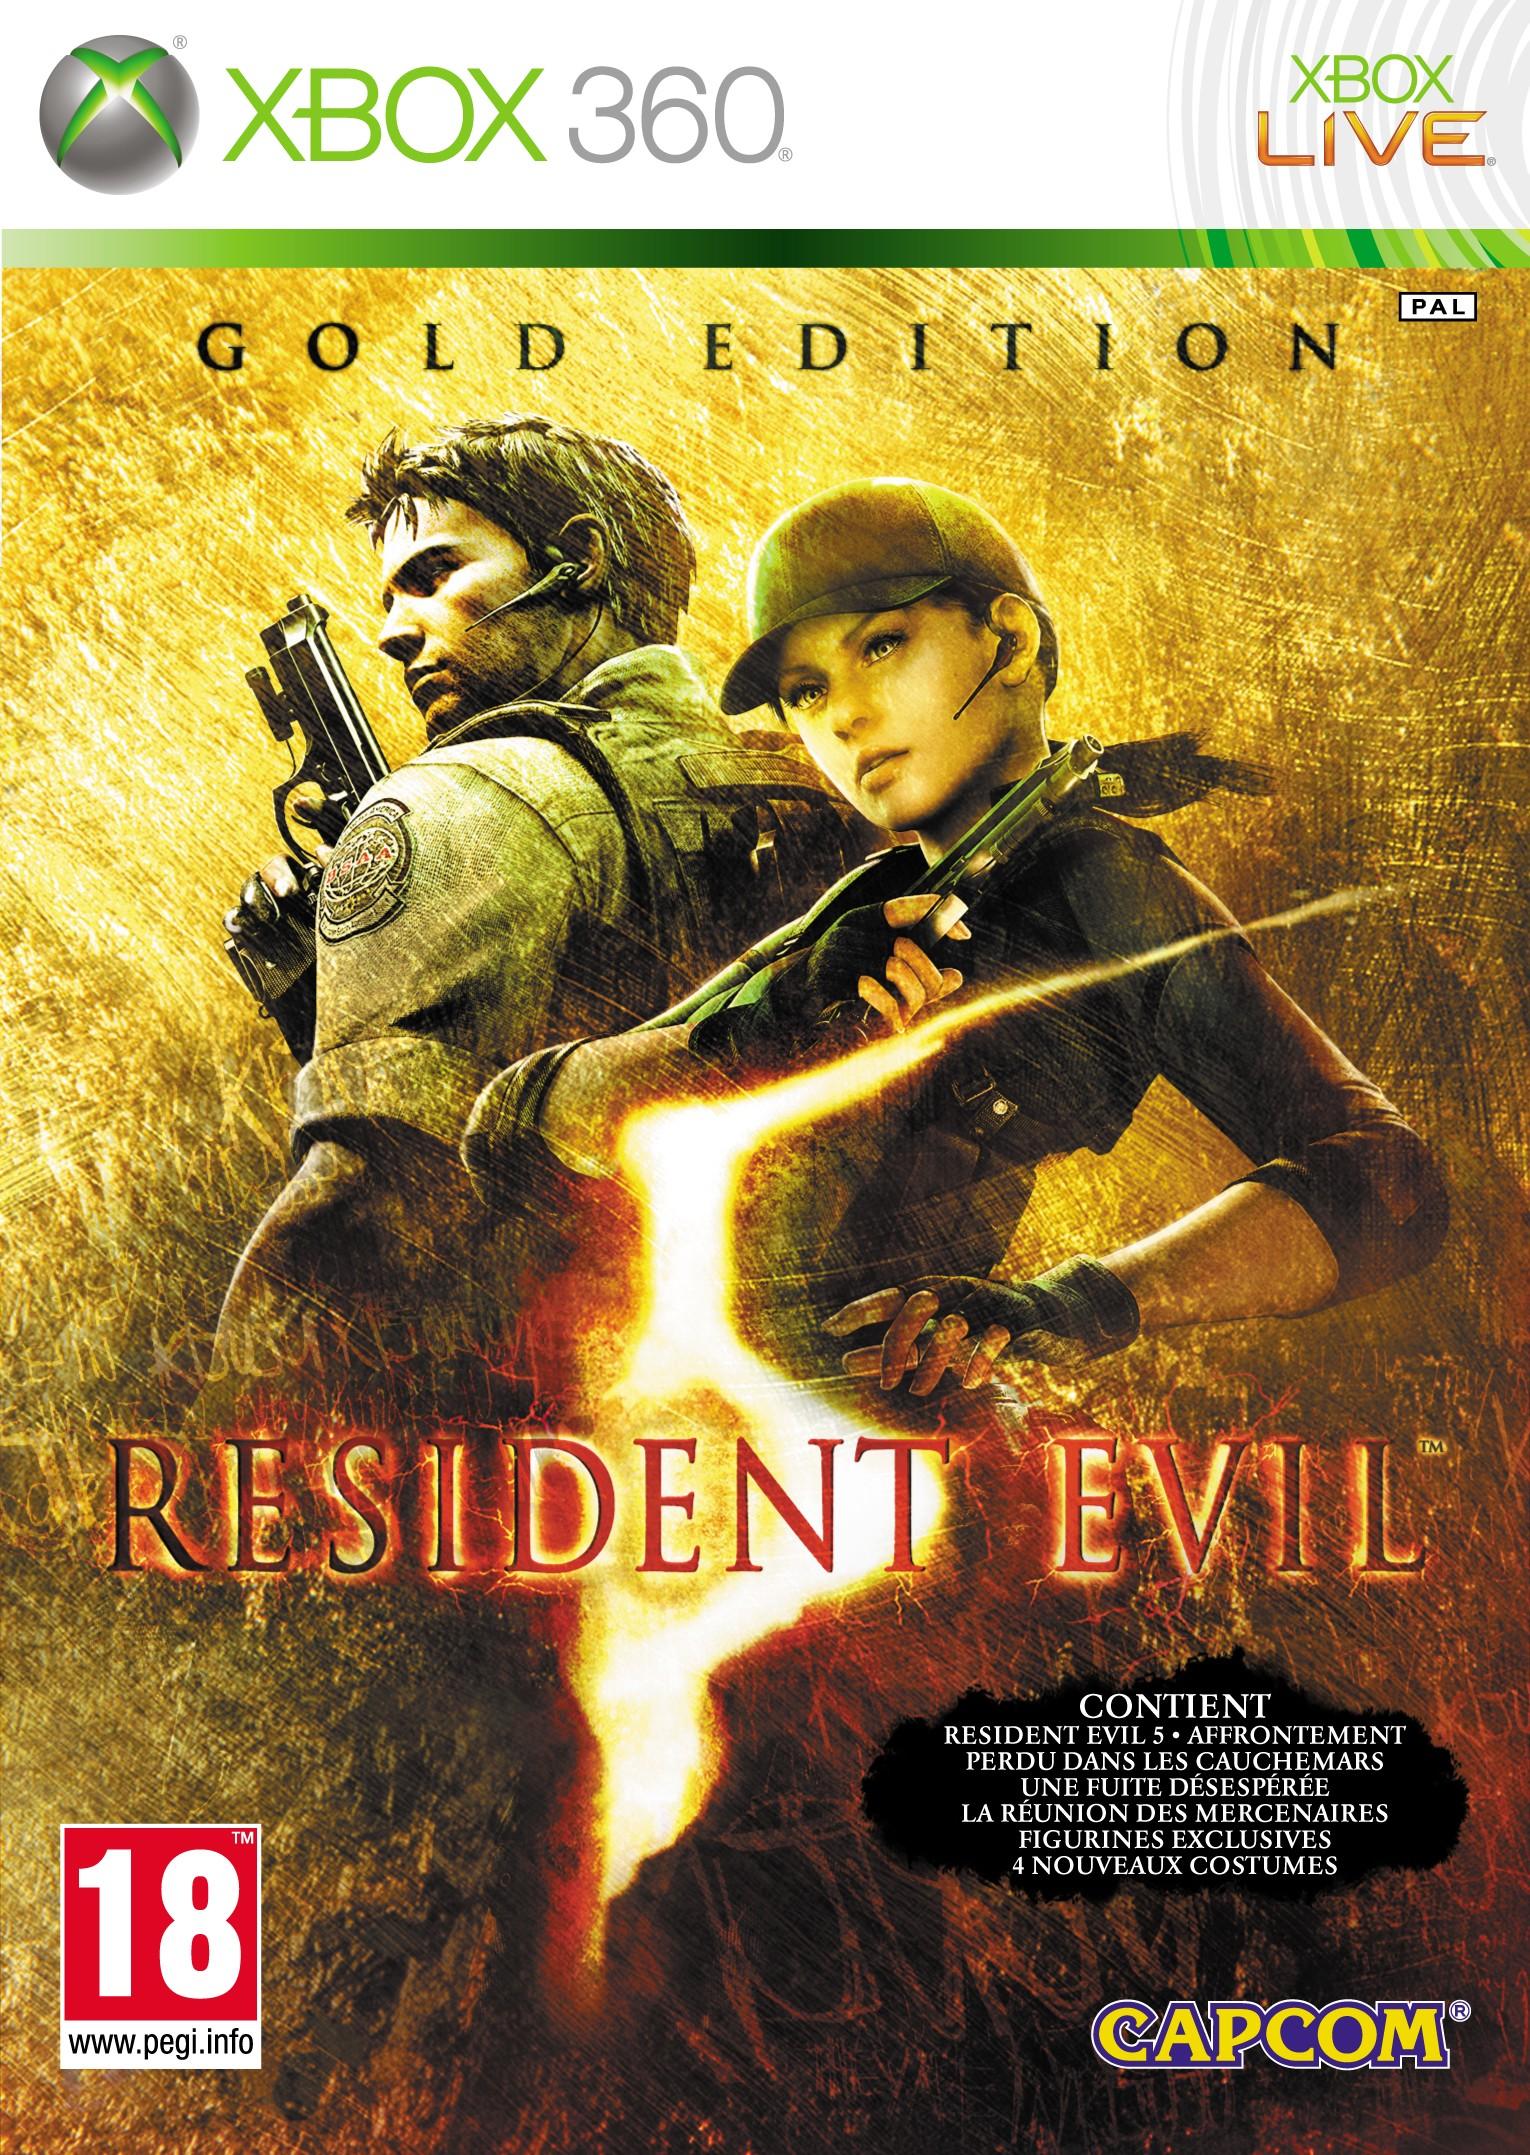 [Commande] Resident Evil 5 : Gold Edition